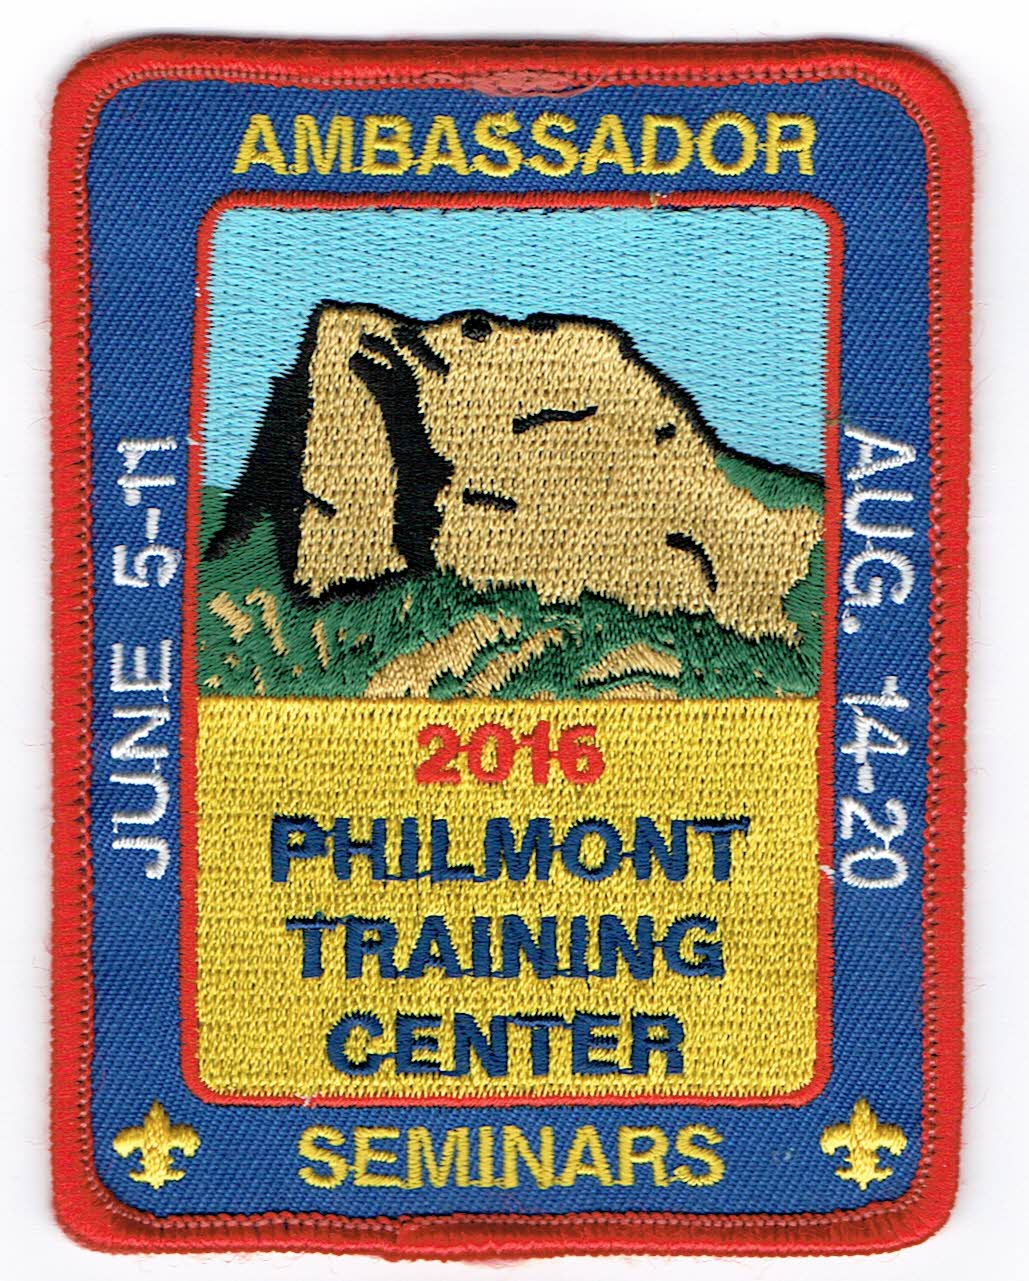 Ambassador Seminars 2016 patch image